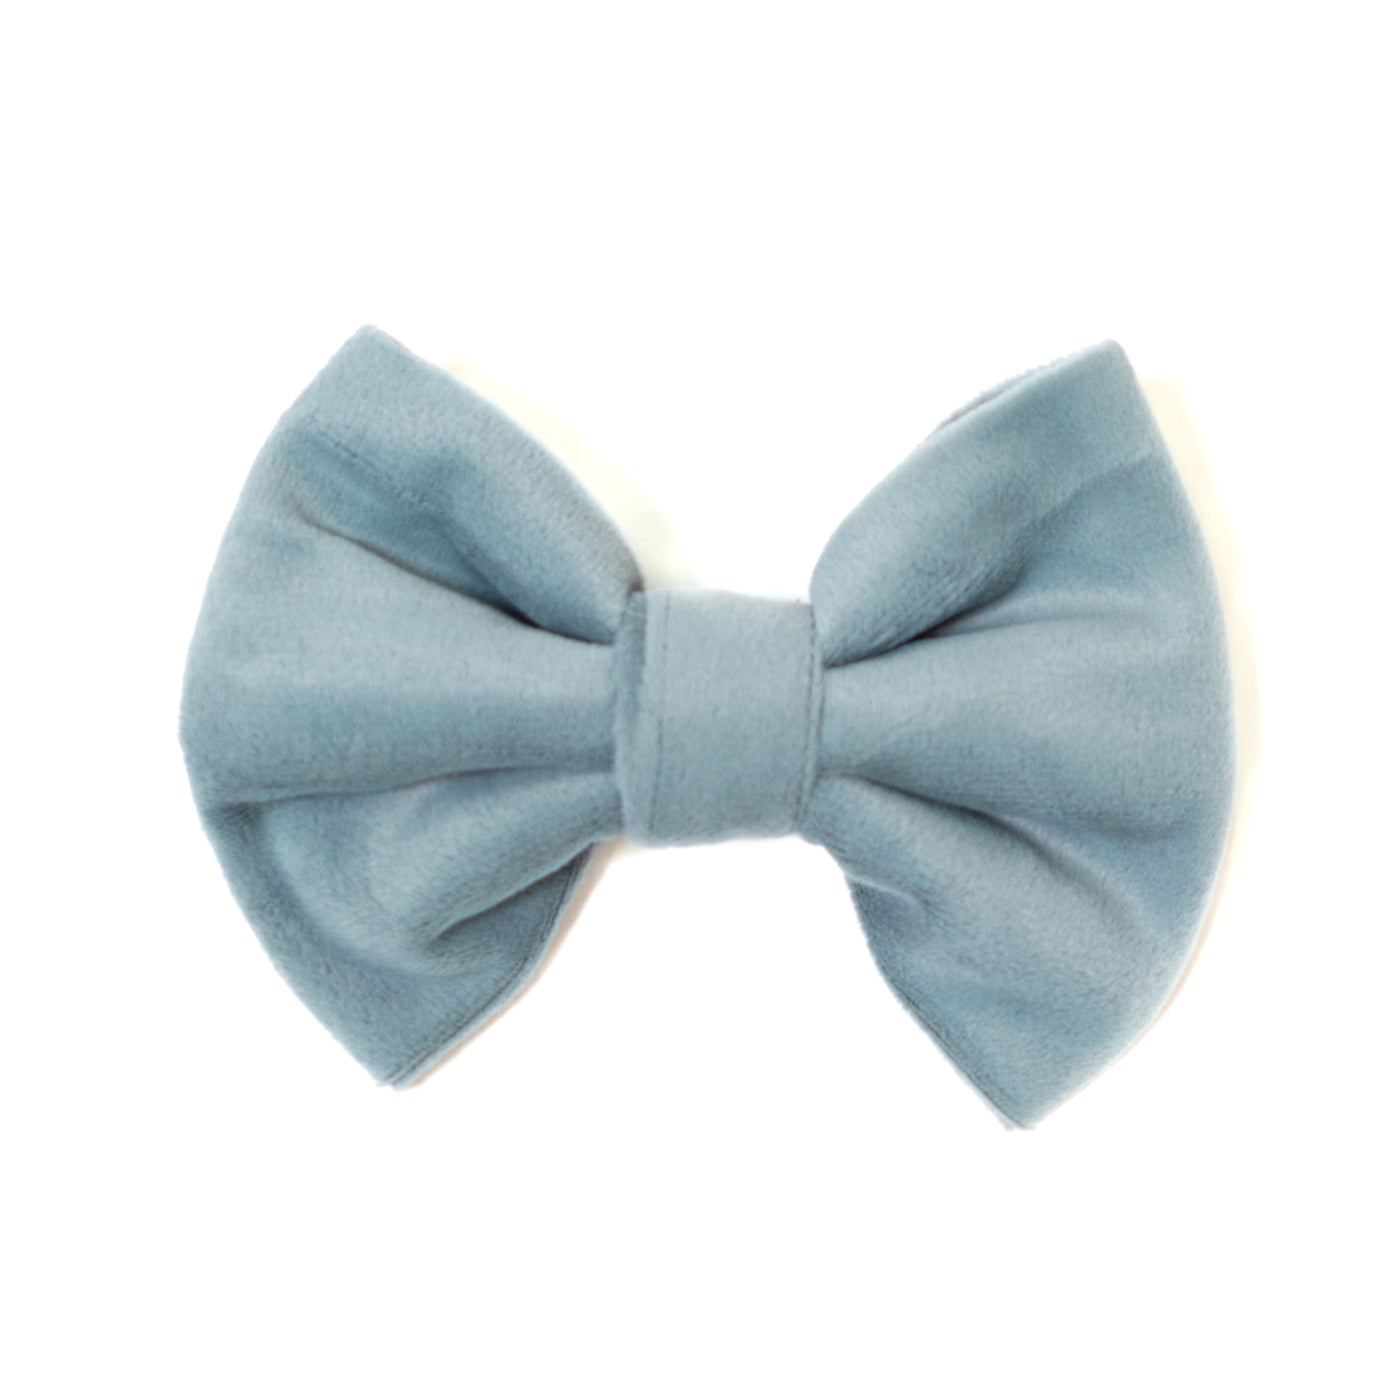 River blue velvet dog bow tie for collar or harness